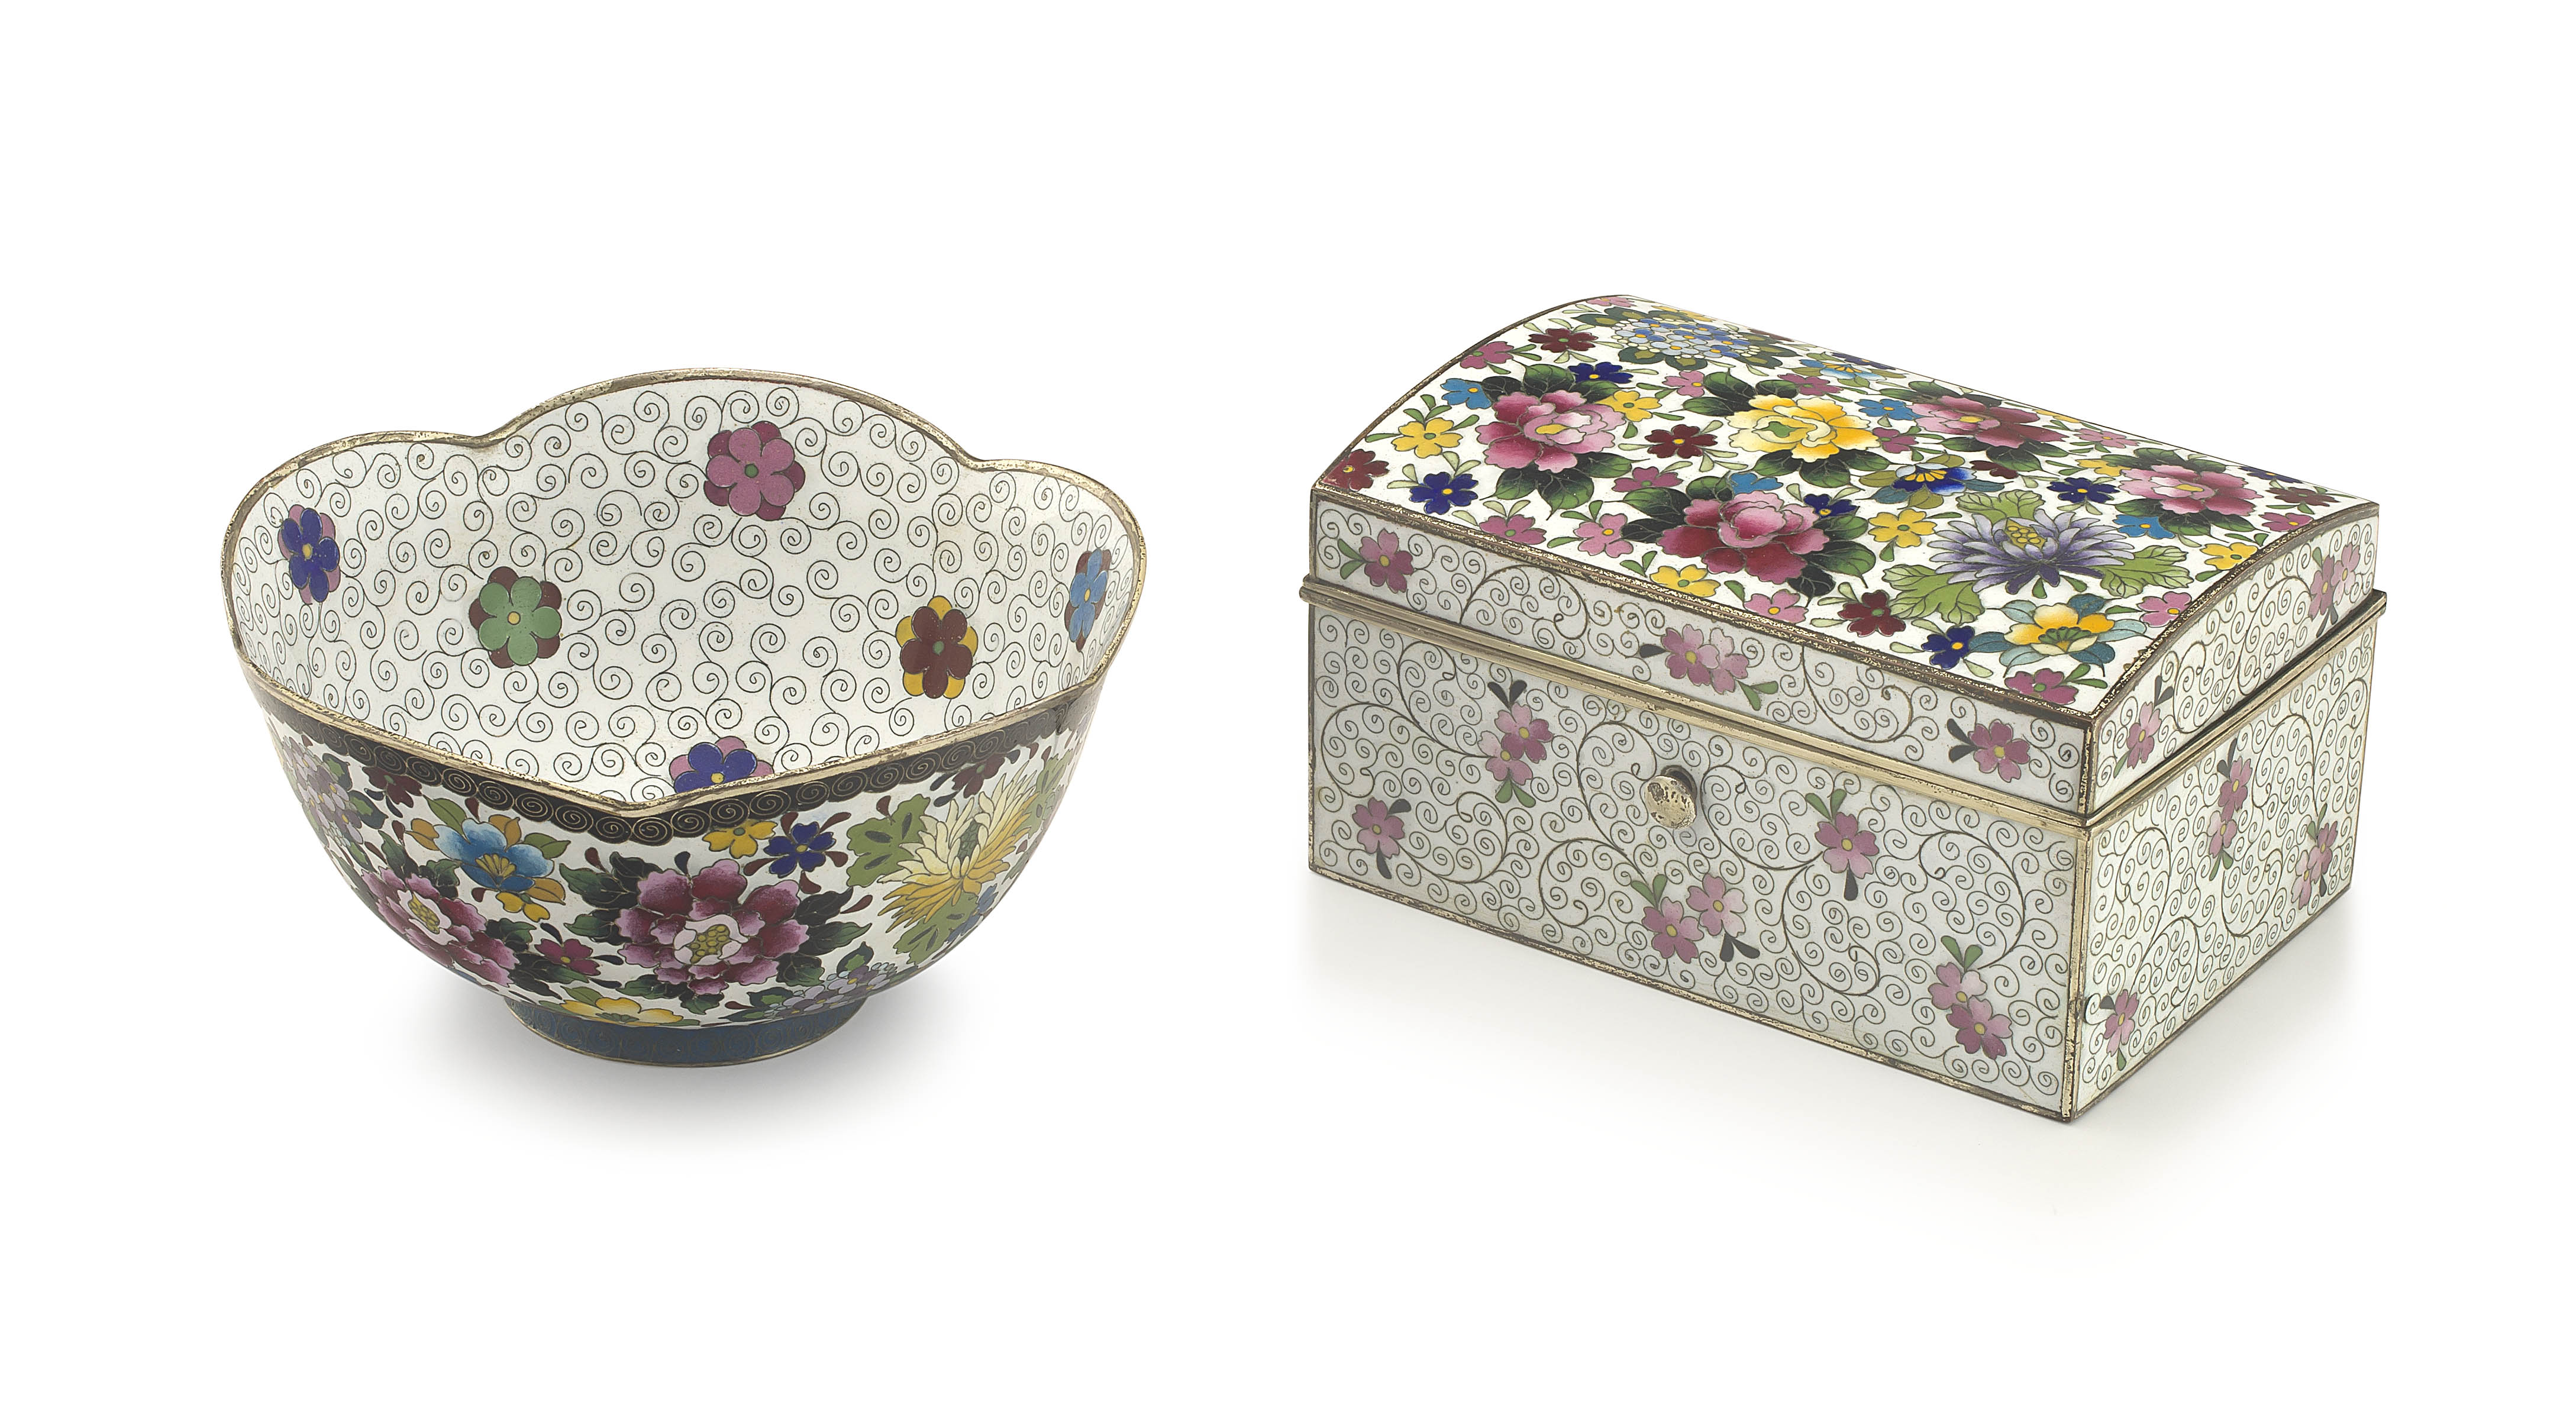 A Japanese cloisonné enamel box, Inaba Cloisonné Co., late Meiji period, 1868-1912